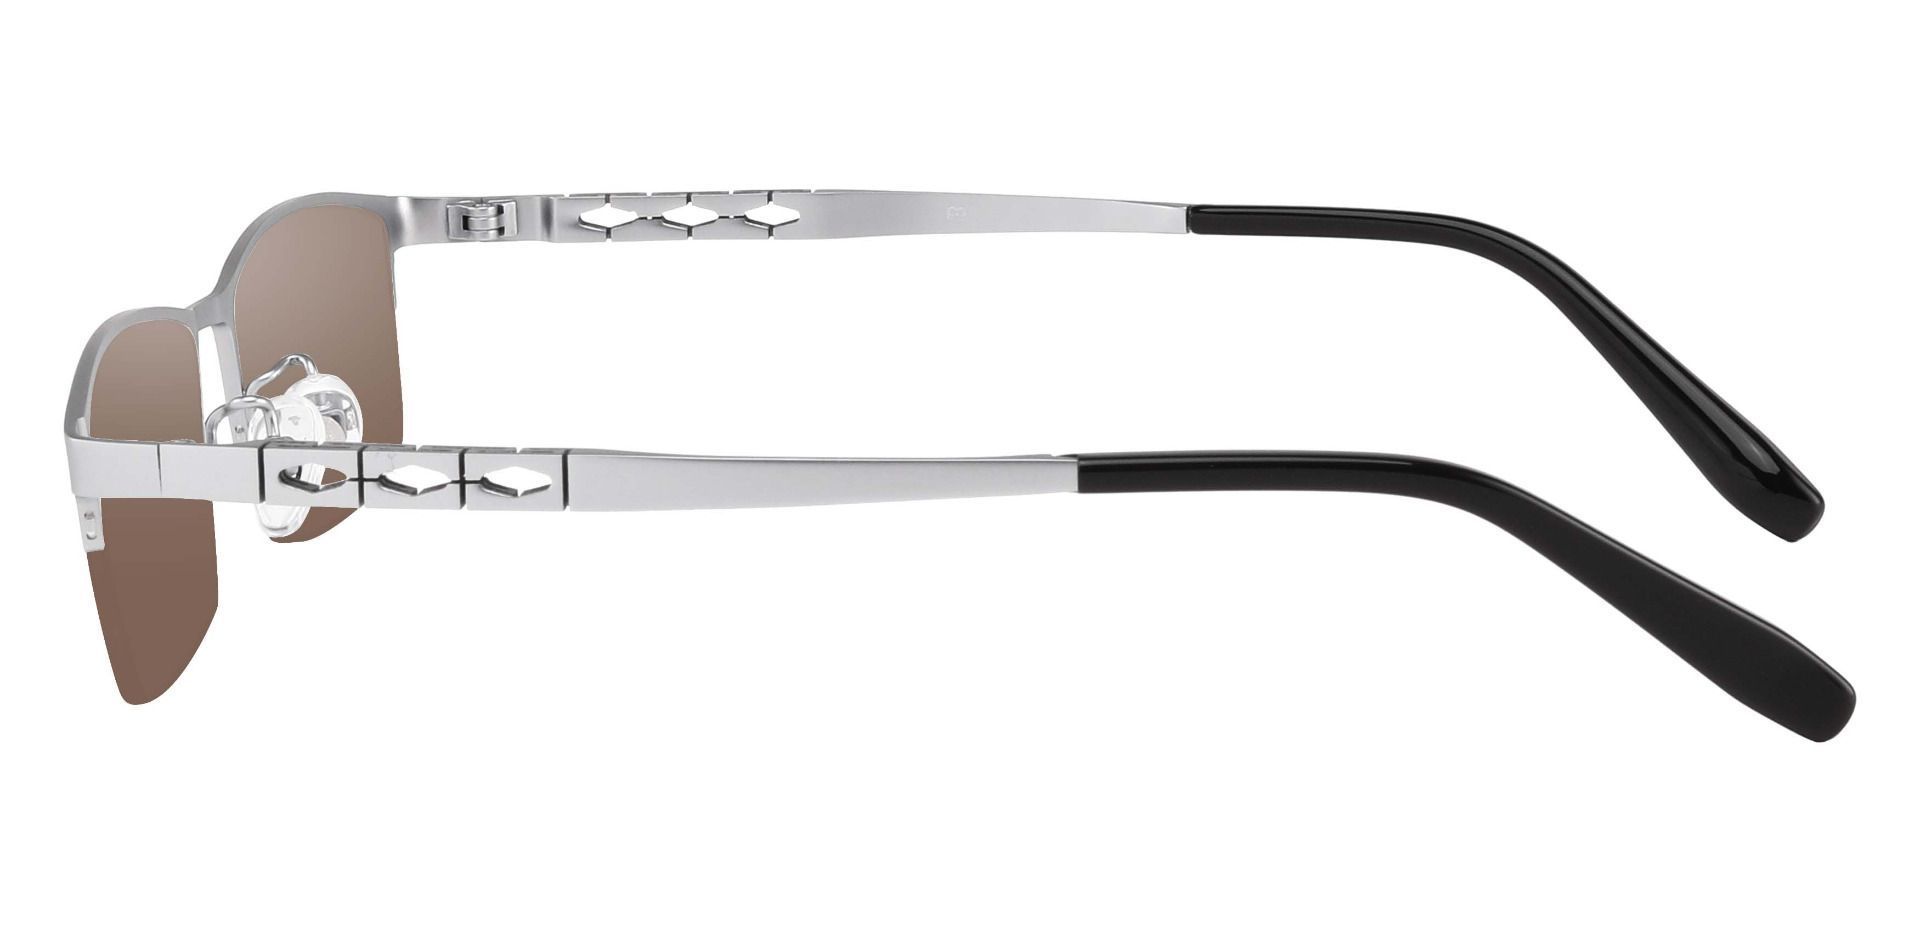 Burlington Rectangle Non-Rx Sunglasses - Silver Frame With Brown Lenses